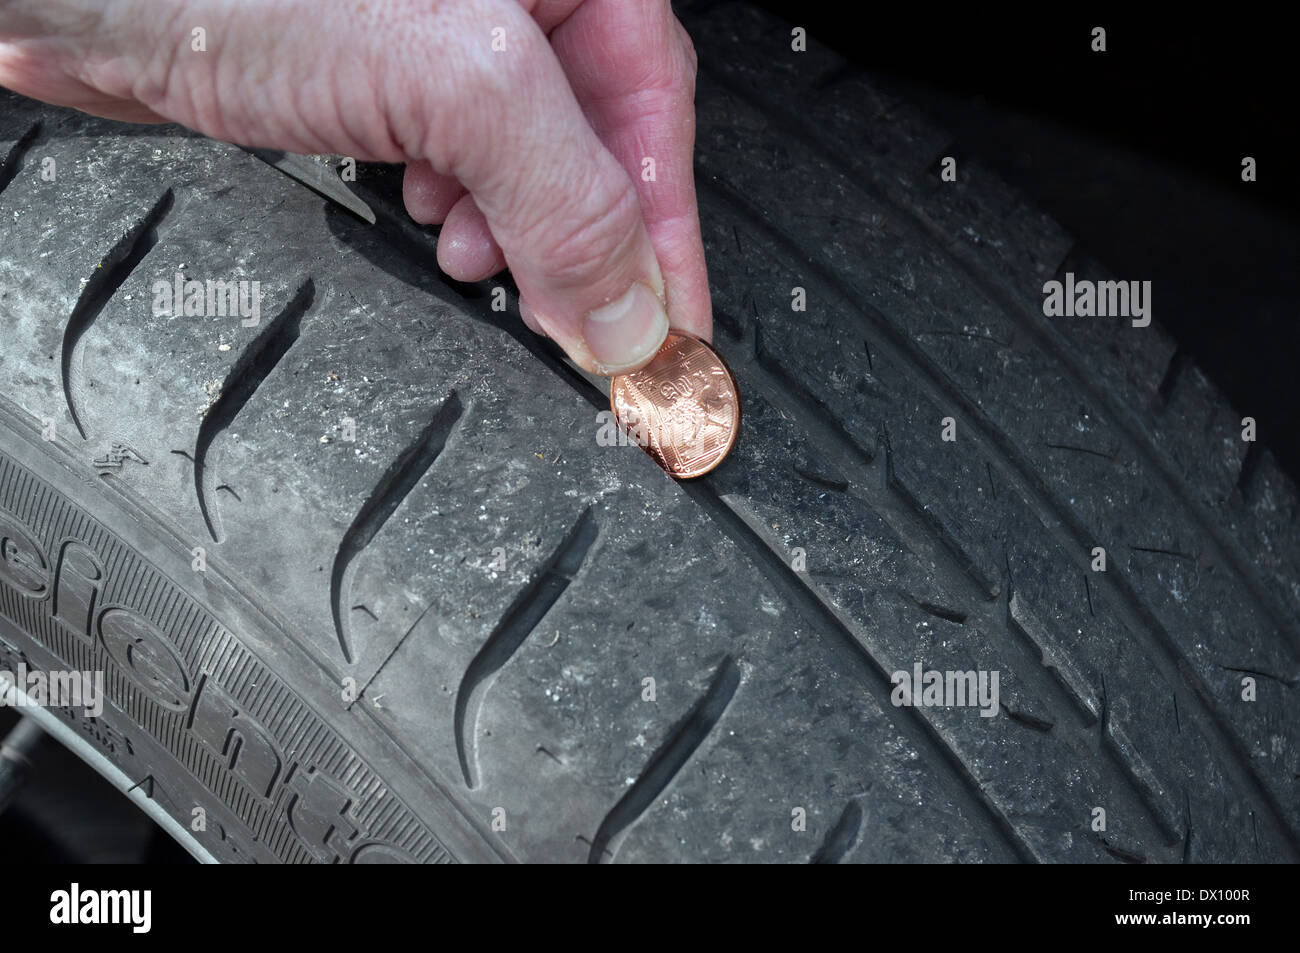 ATsafepro Digital Truck Tire Tread Gauge Reifenprofilmesser Tyre